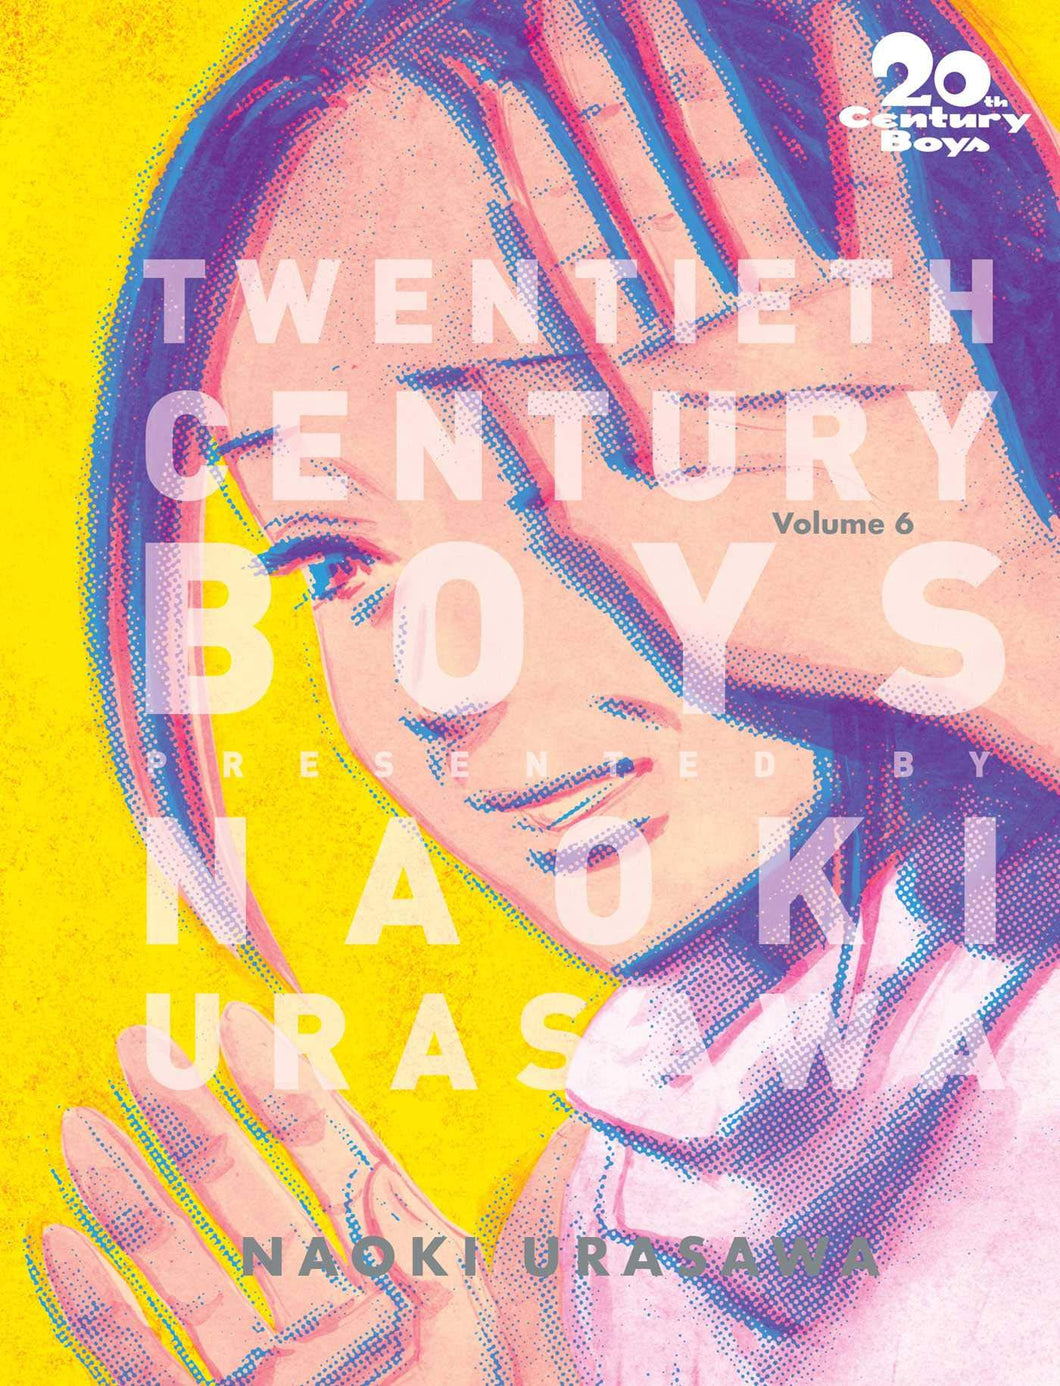 20th Century Boys: The Perfect Edition - Vol 6